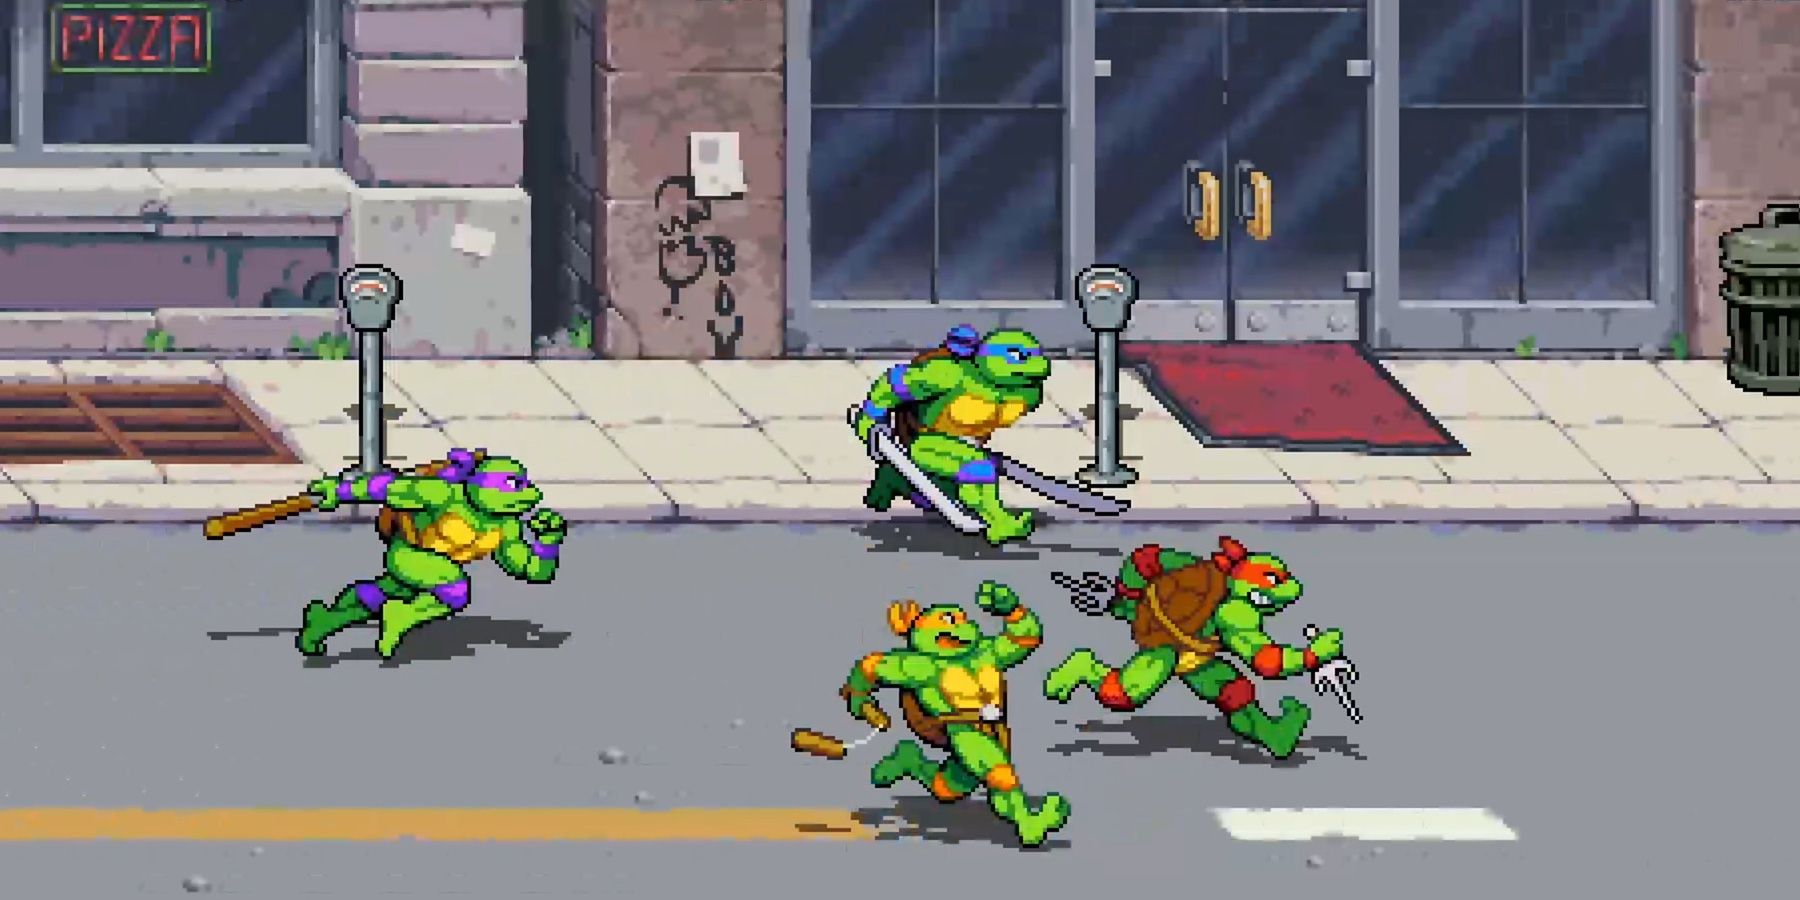 A screenshot showing Donatello, Leonardo, Michaelangelo, and Raphael running through the streets in Teenage Mutant Ninja Turtles: Shredder's Revenge